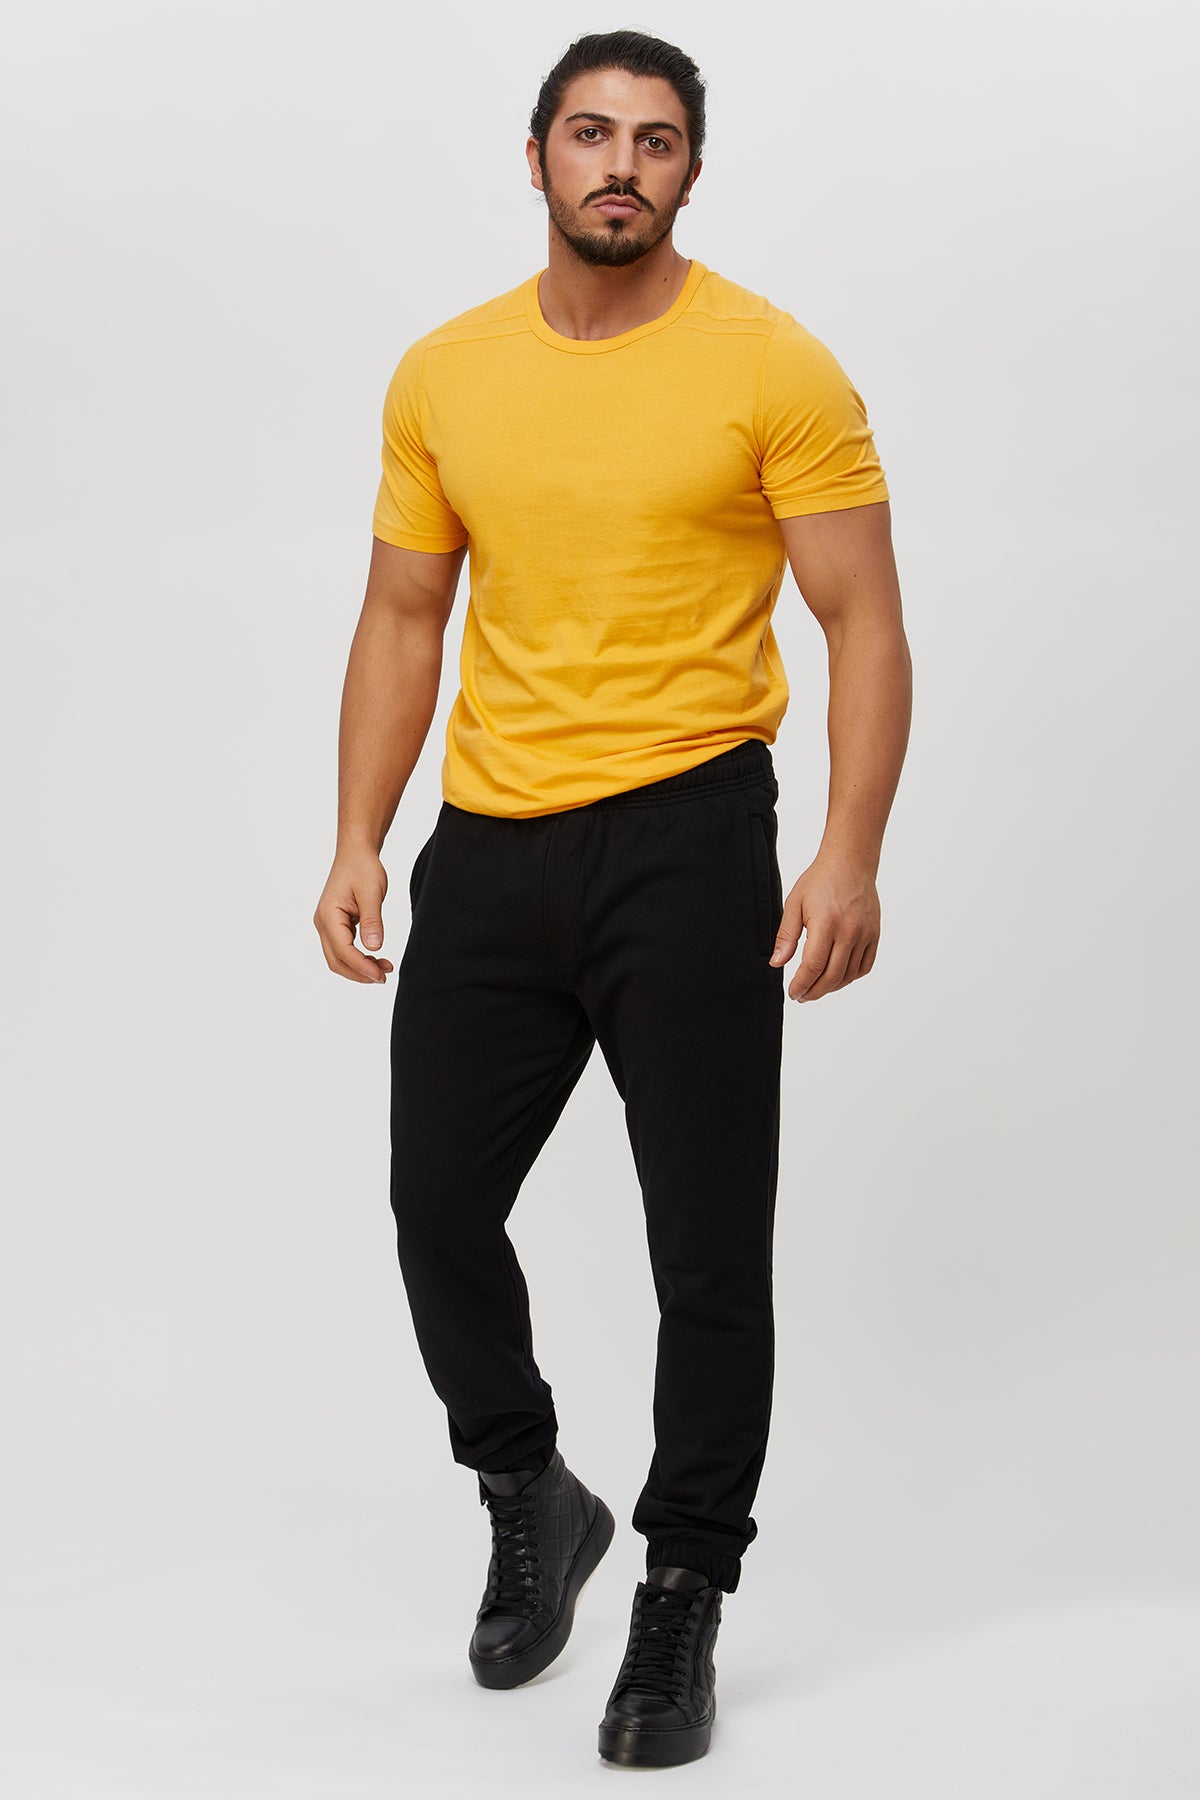 Men's sweatpants - active fleece joggers. 100 % great quality Turkish Pima cotton preshrunk. Zippered pockets. Sports. Gym, Fitness.